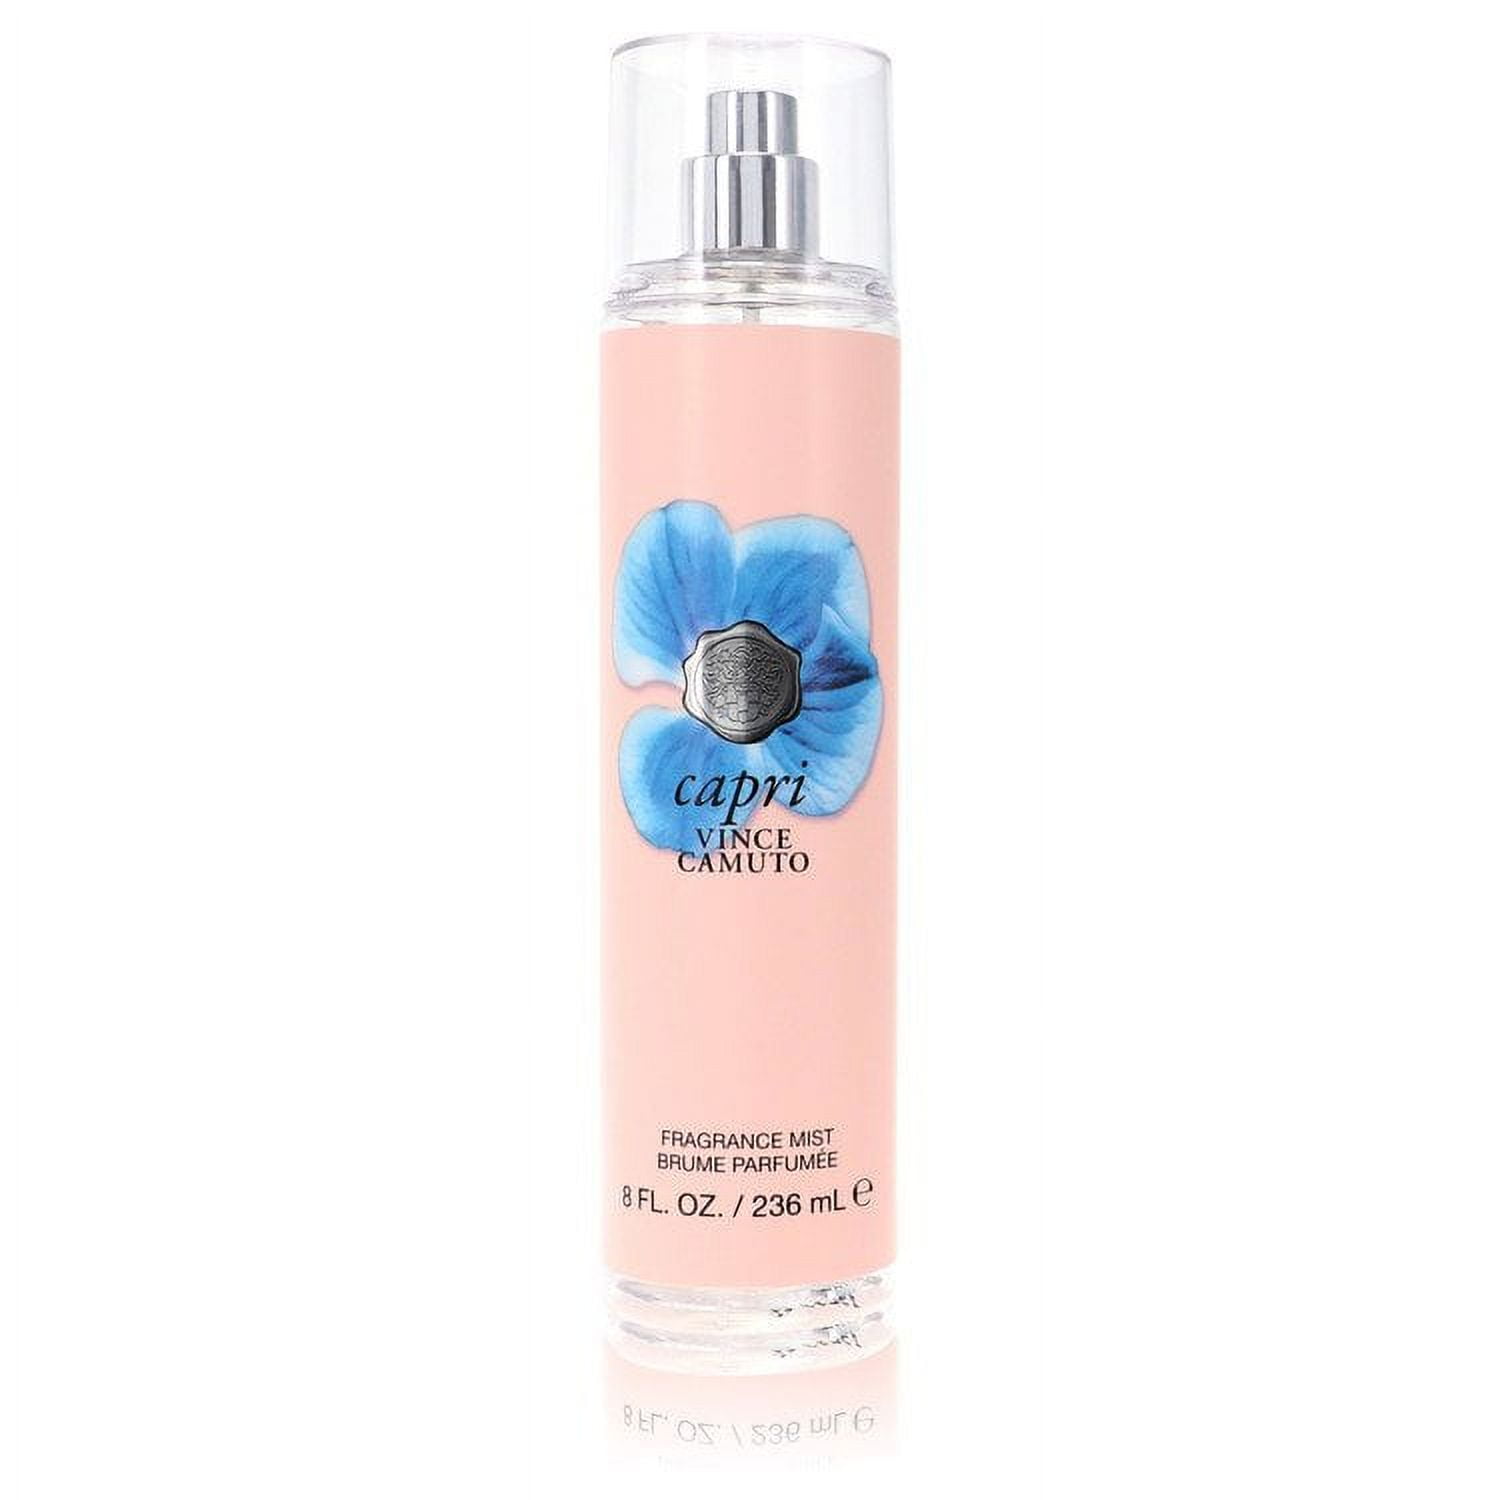 Vince Camuto Fiori Body Mist - 8 oz Floral Perfume for Women